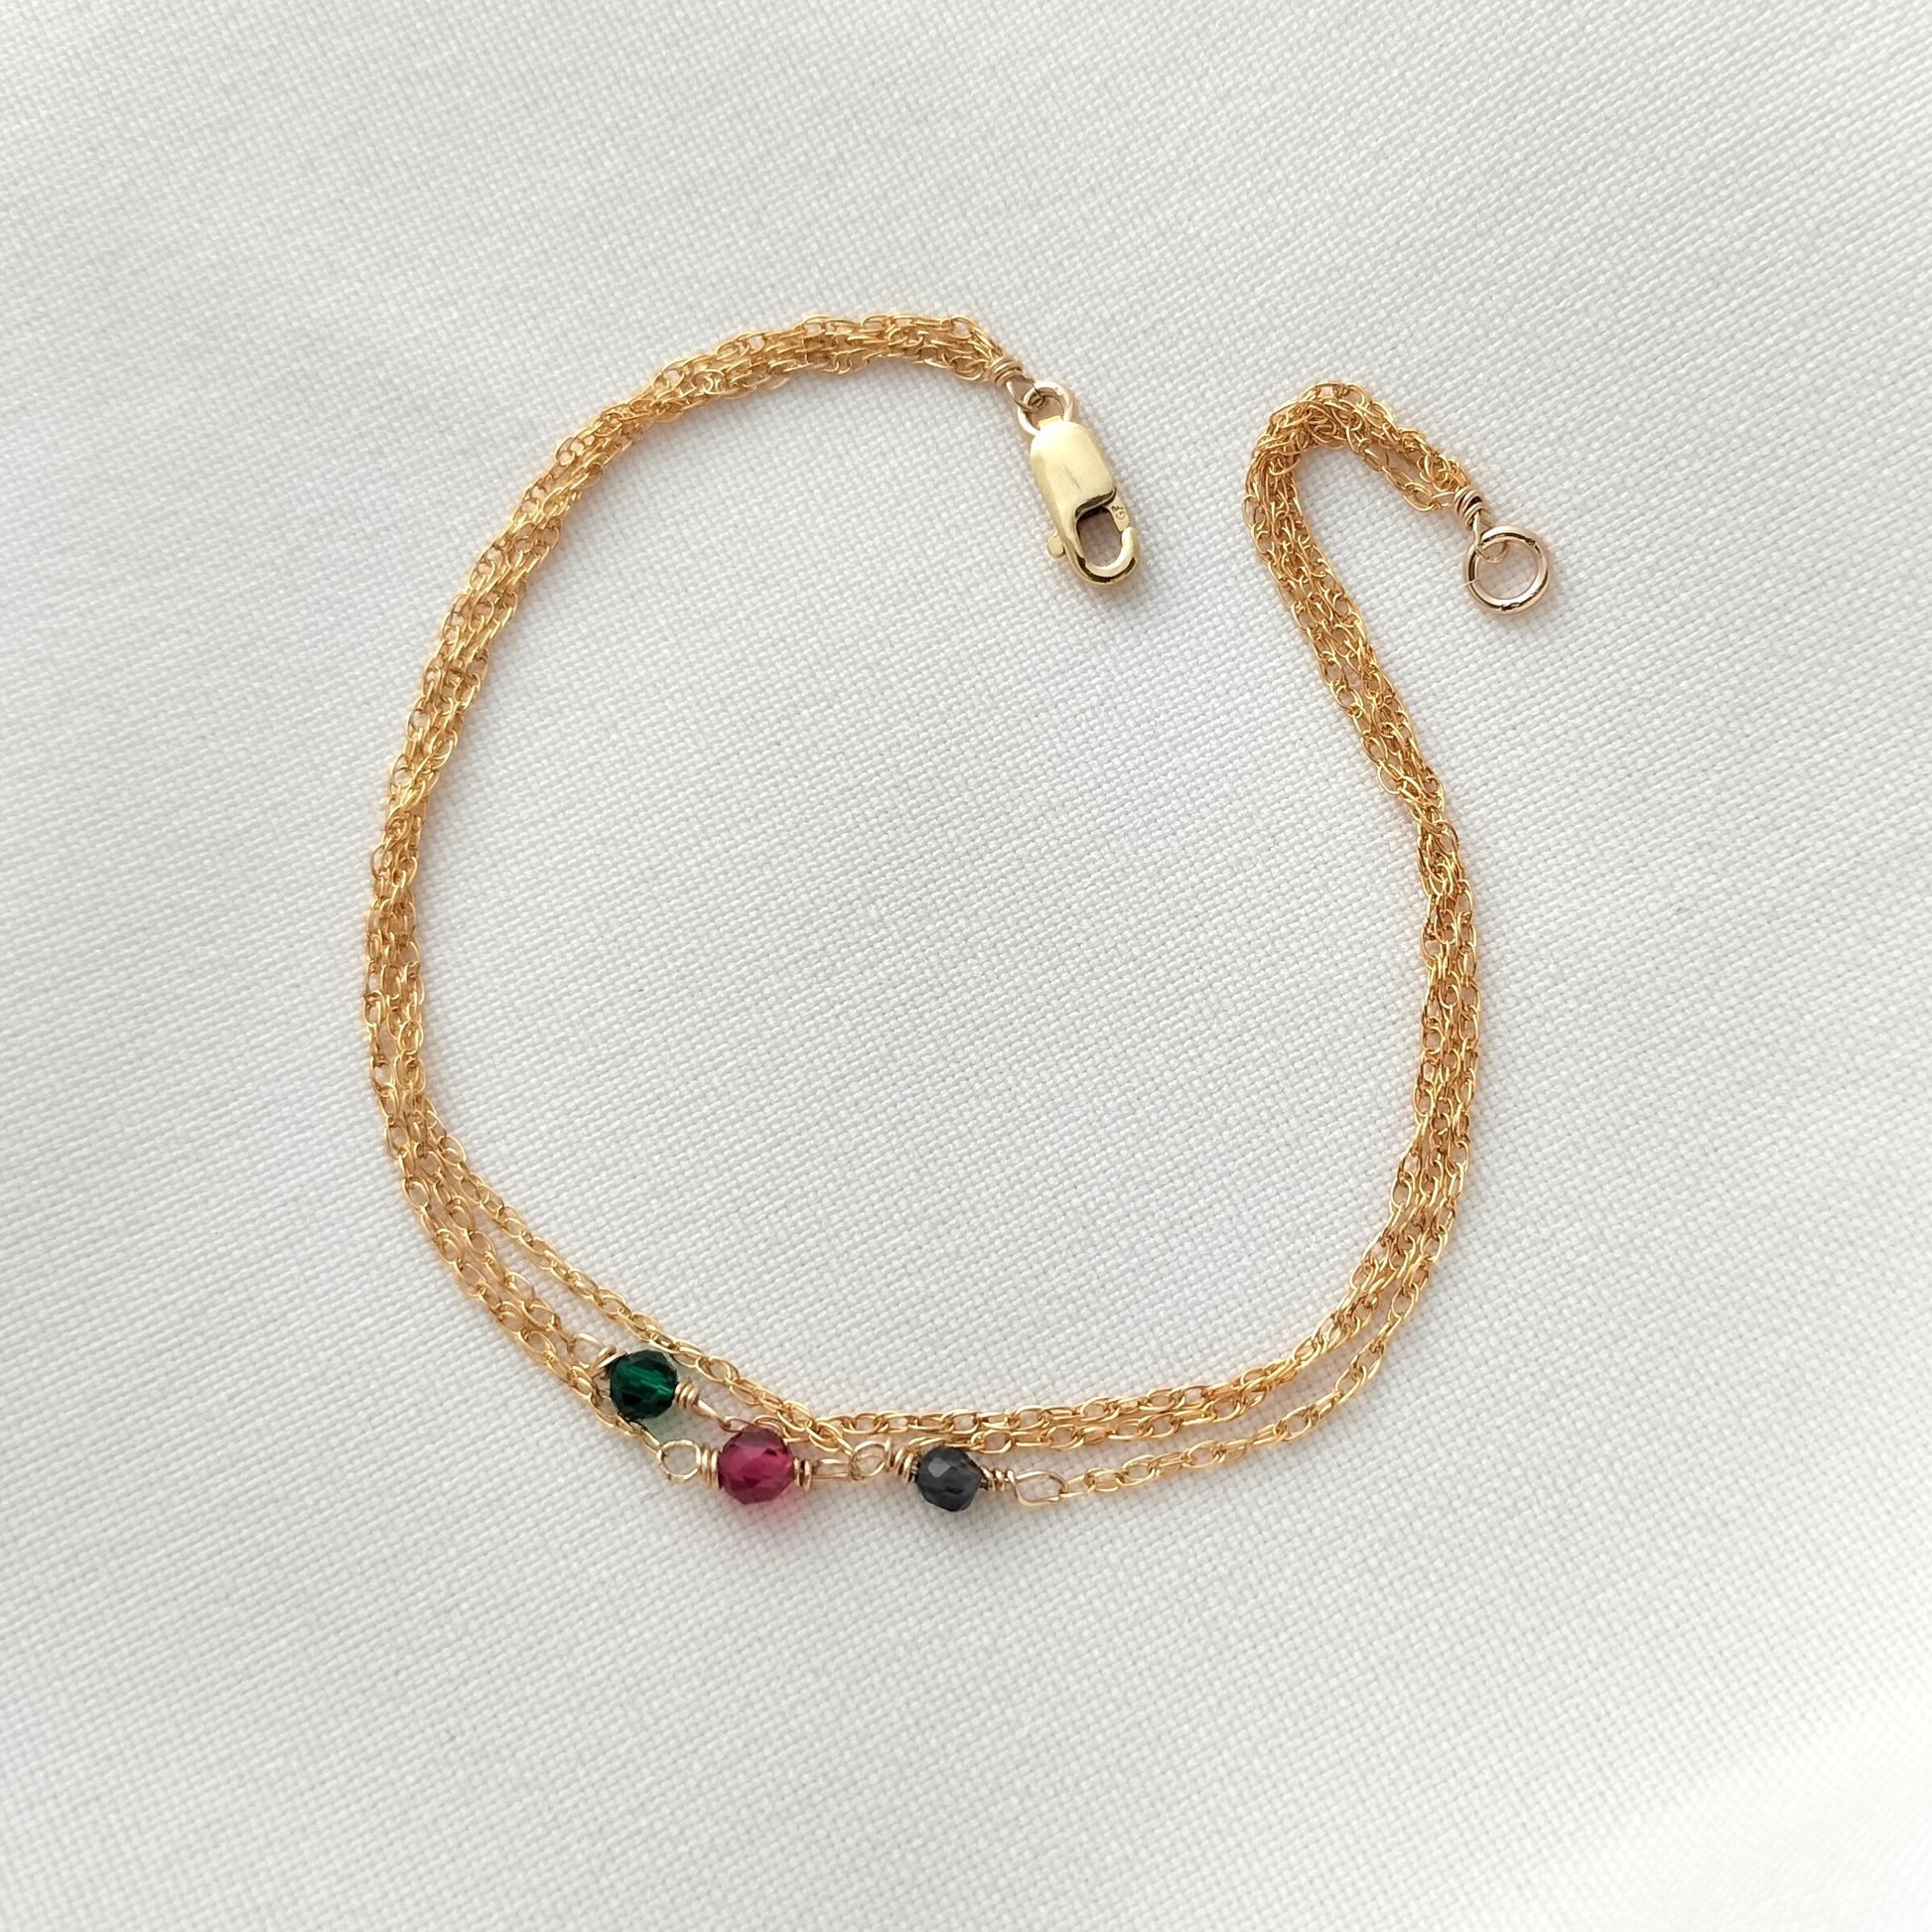 Triple strand jewel tone gemstone bracelet